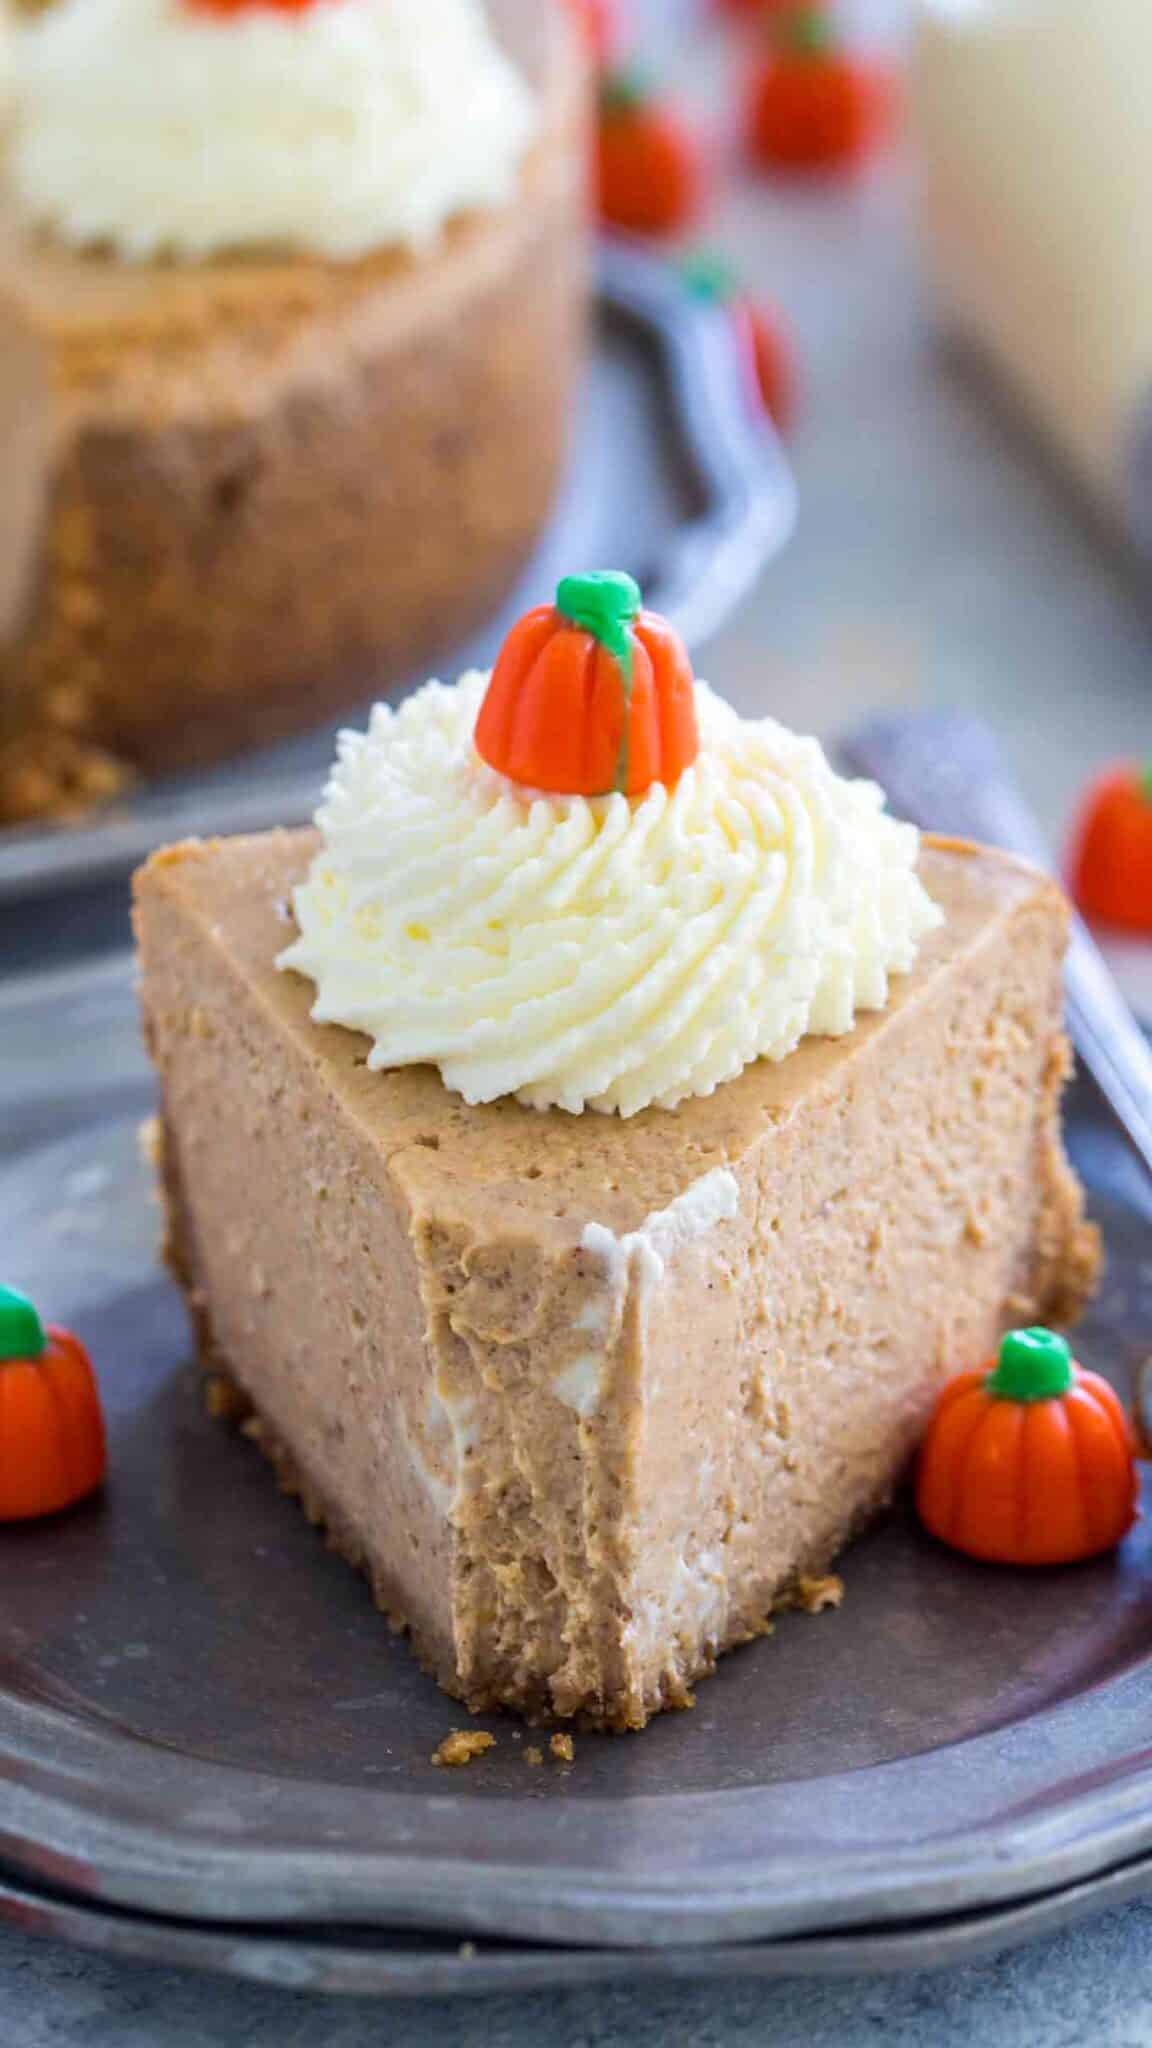 https://sweetandsavorymeals.com/wp-content/uploads/2018/09/Instant-Pot-Pumpkin-Cheesecake-4-scaled.jpg